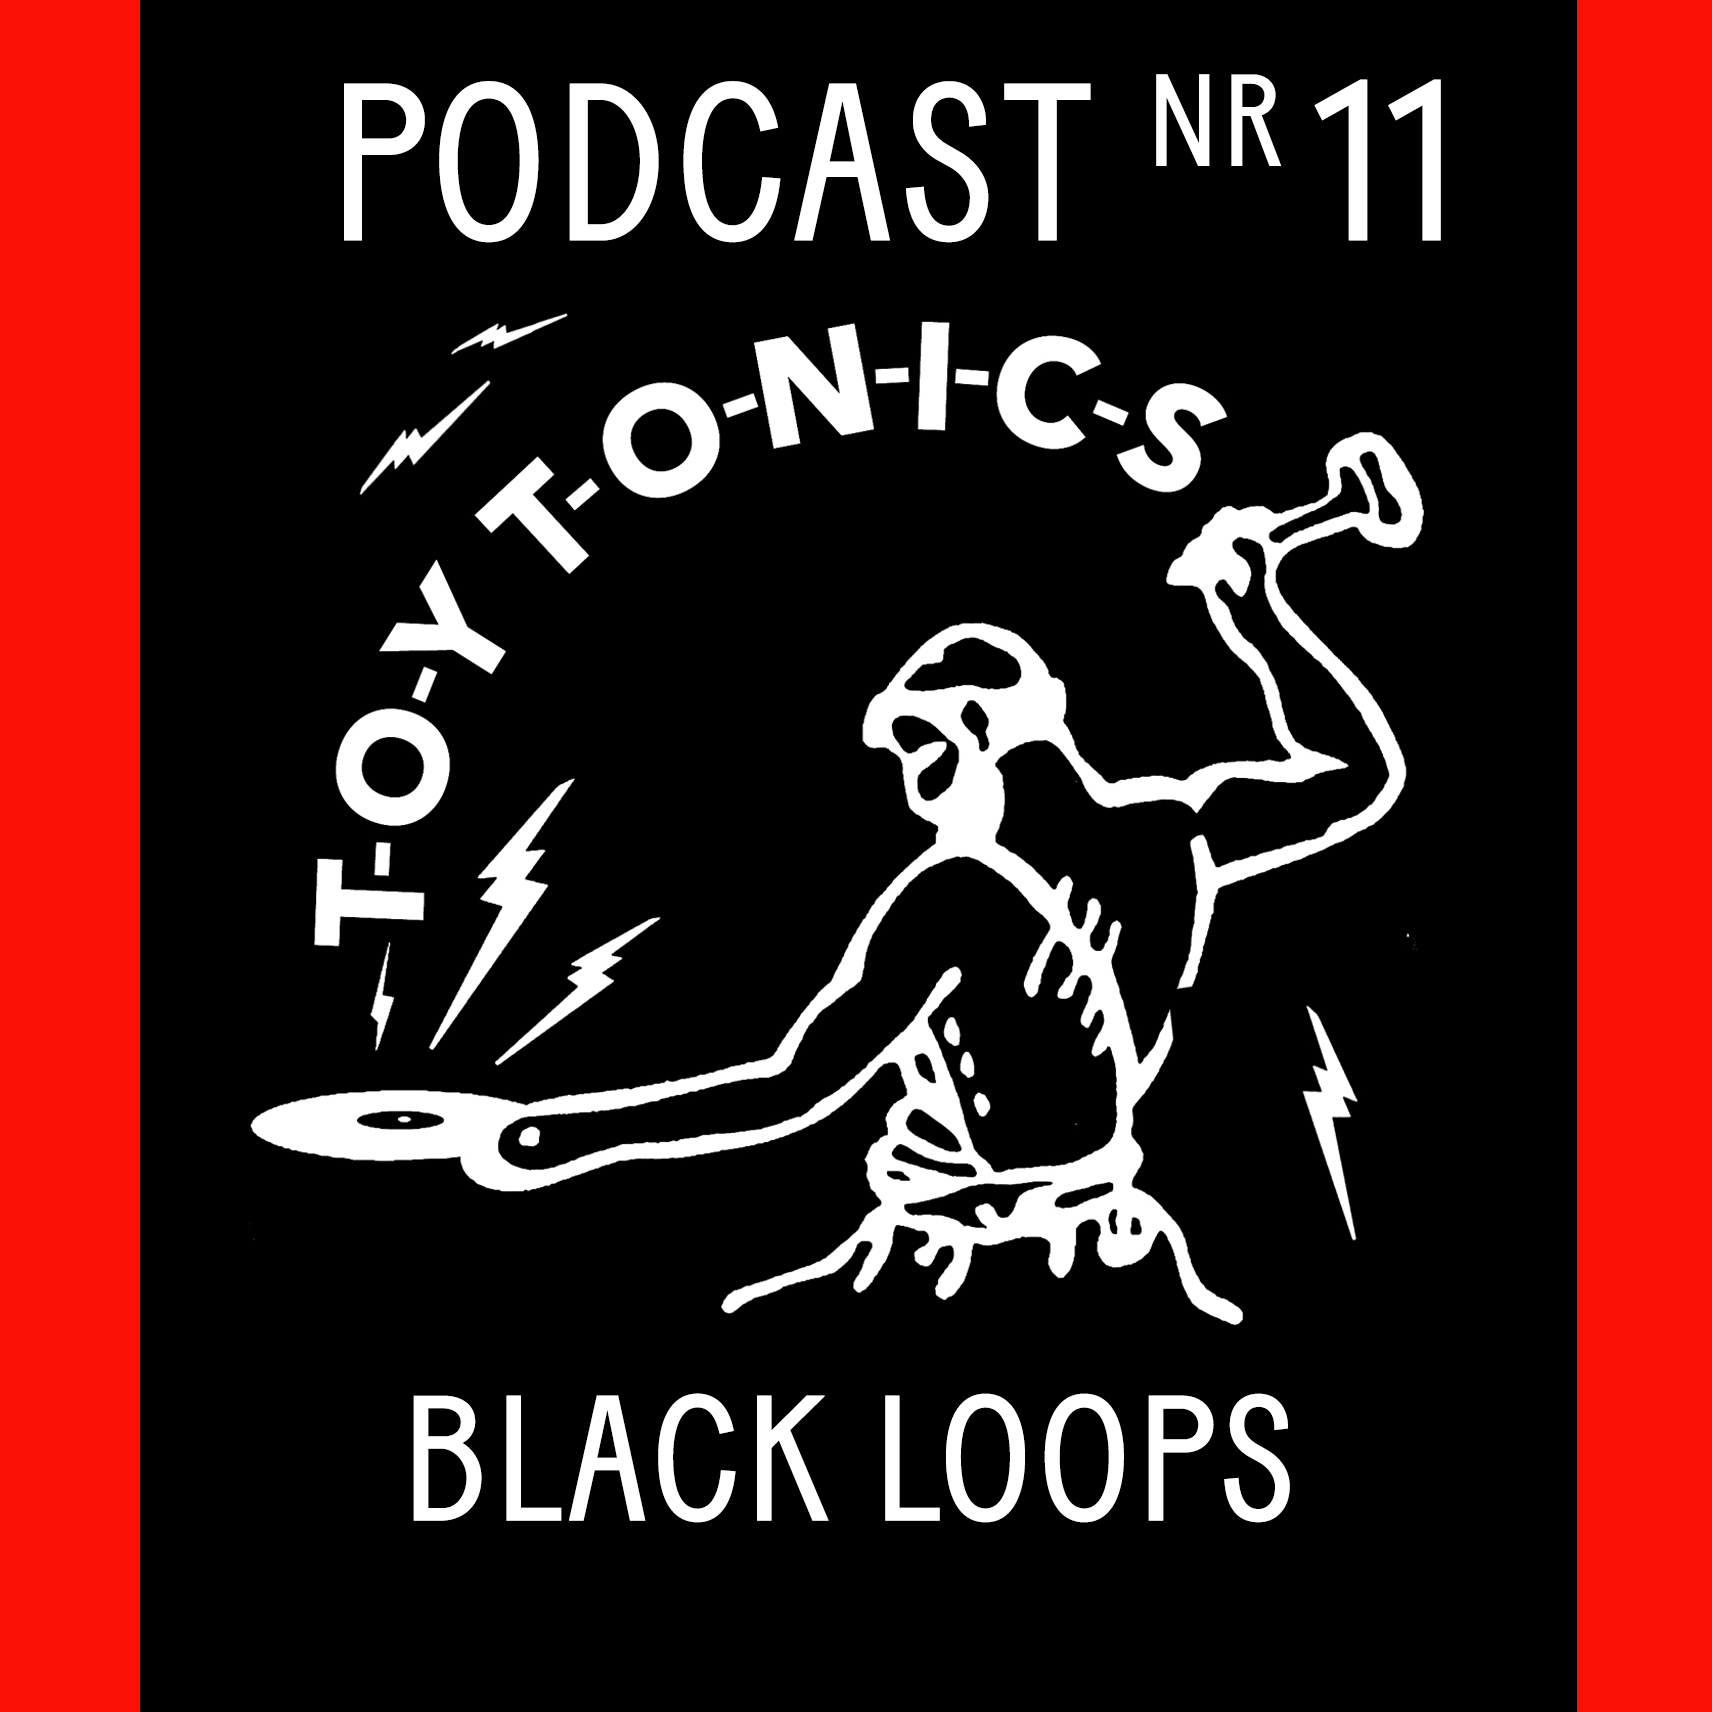 PODCAST NR 11 - Black Loops